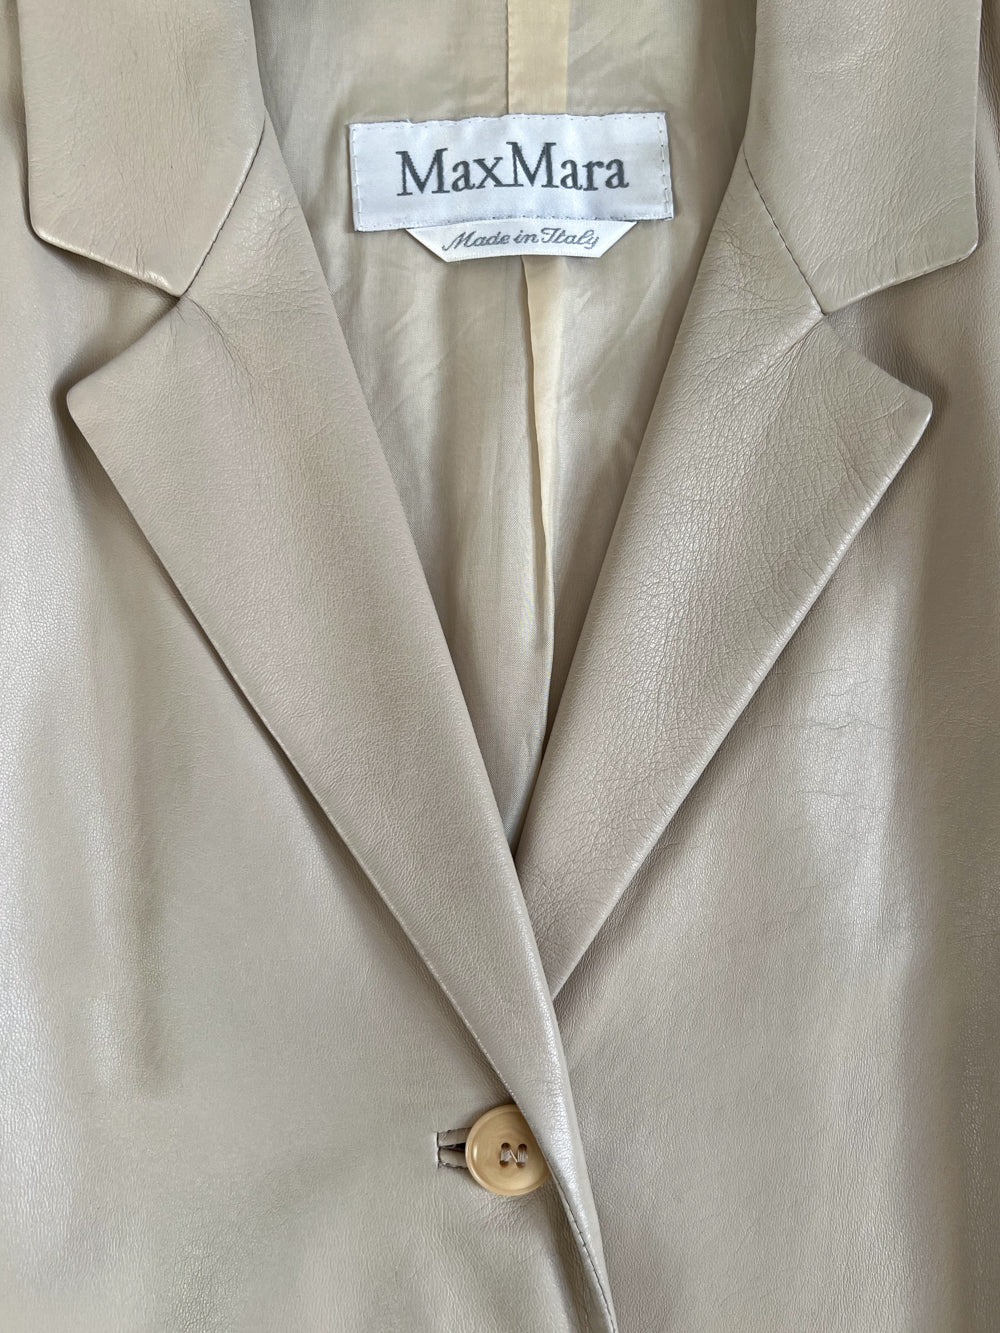 Vintage Max Mara Leather Jacket Size S (8-10)